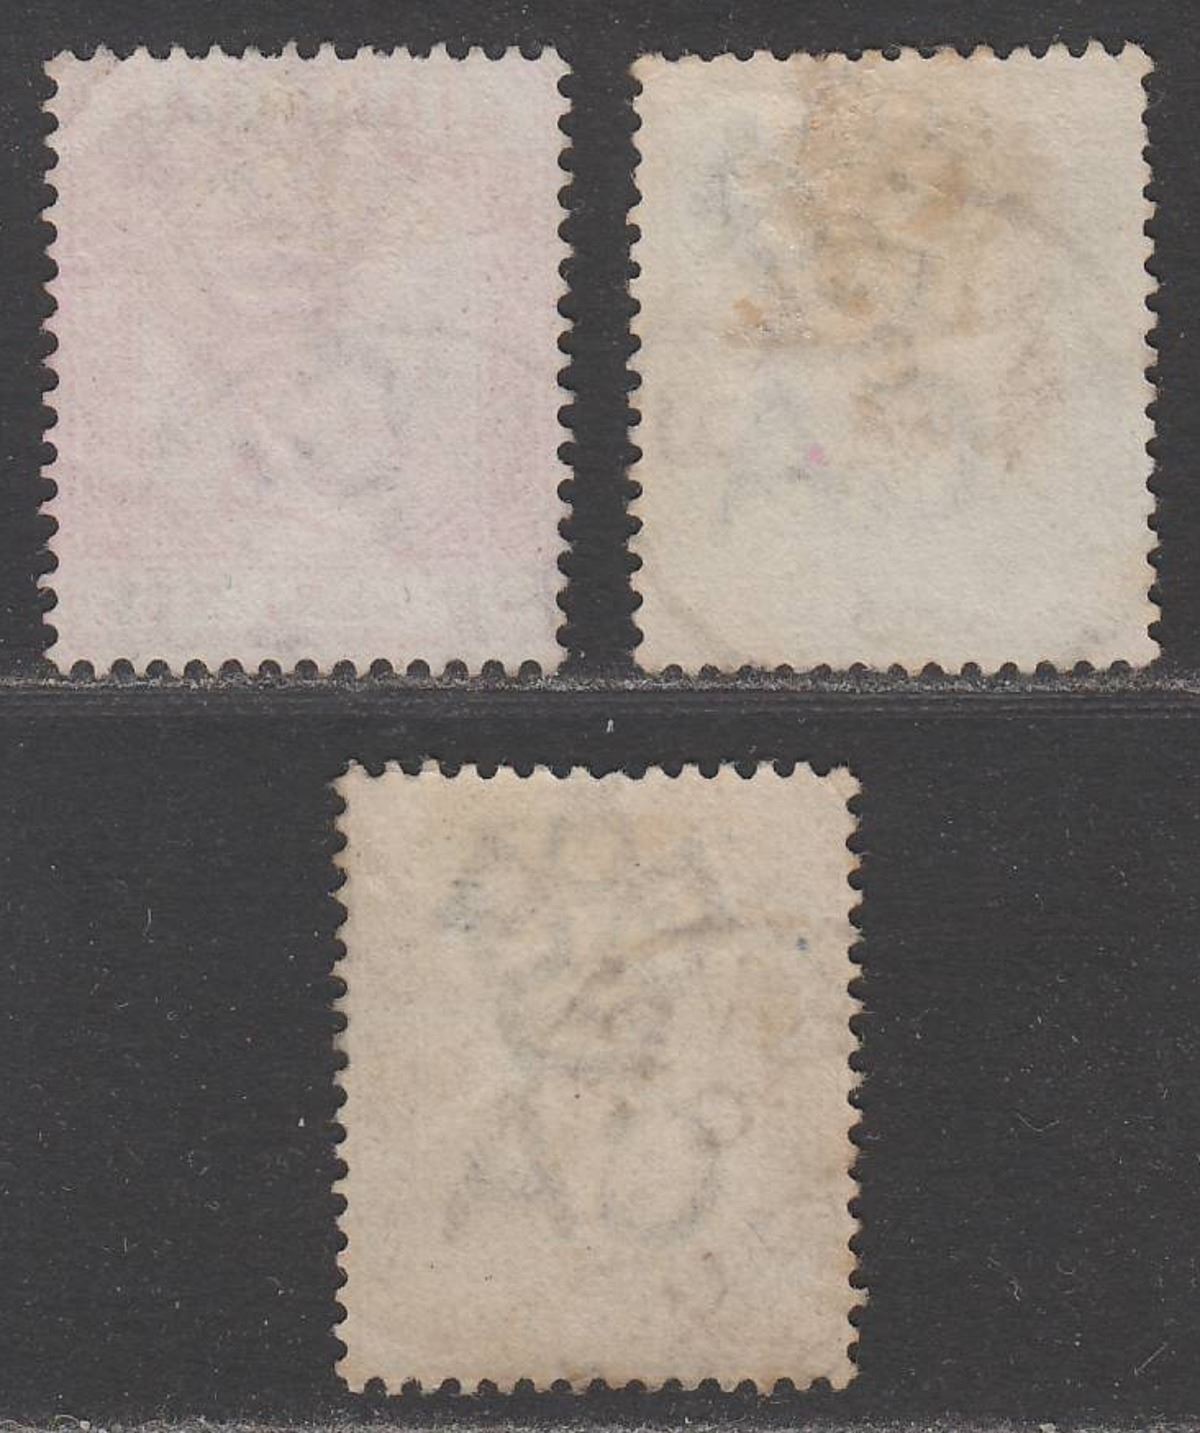 Gibraltar used Morocco 1889 QV 5c, 10c, 25c Used w TANGIER postmarks cat £22